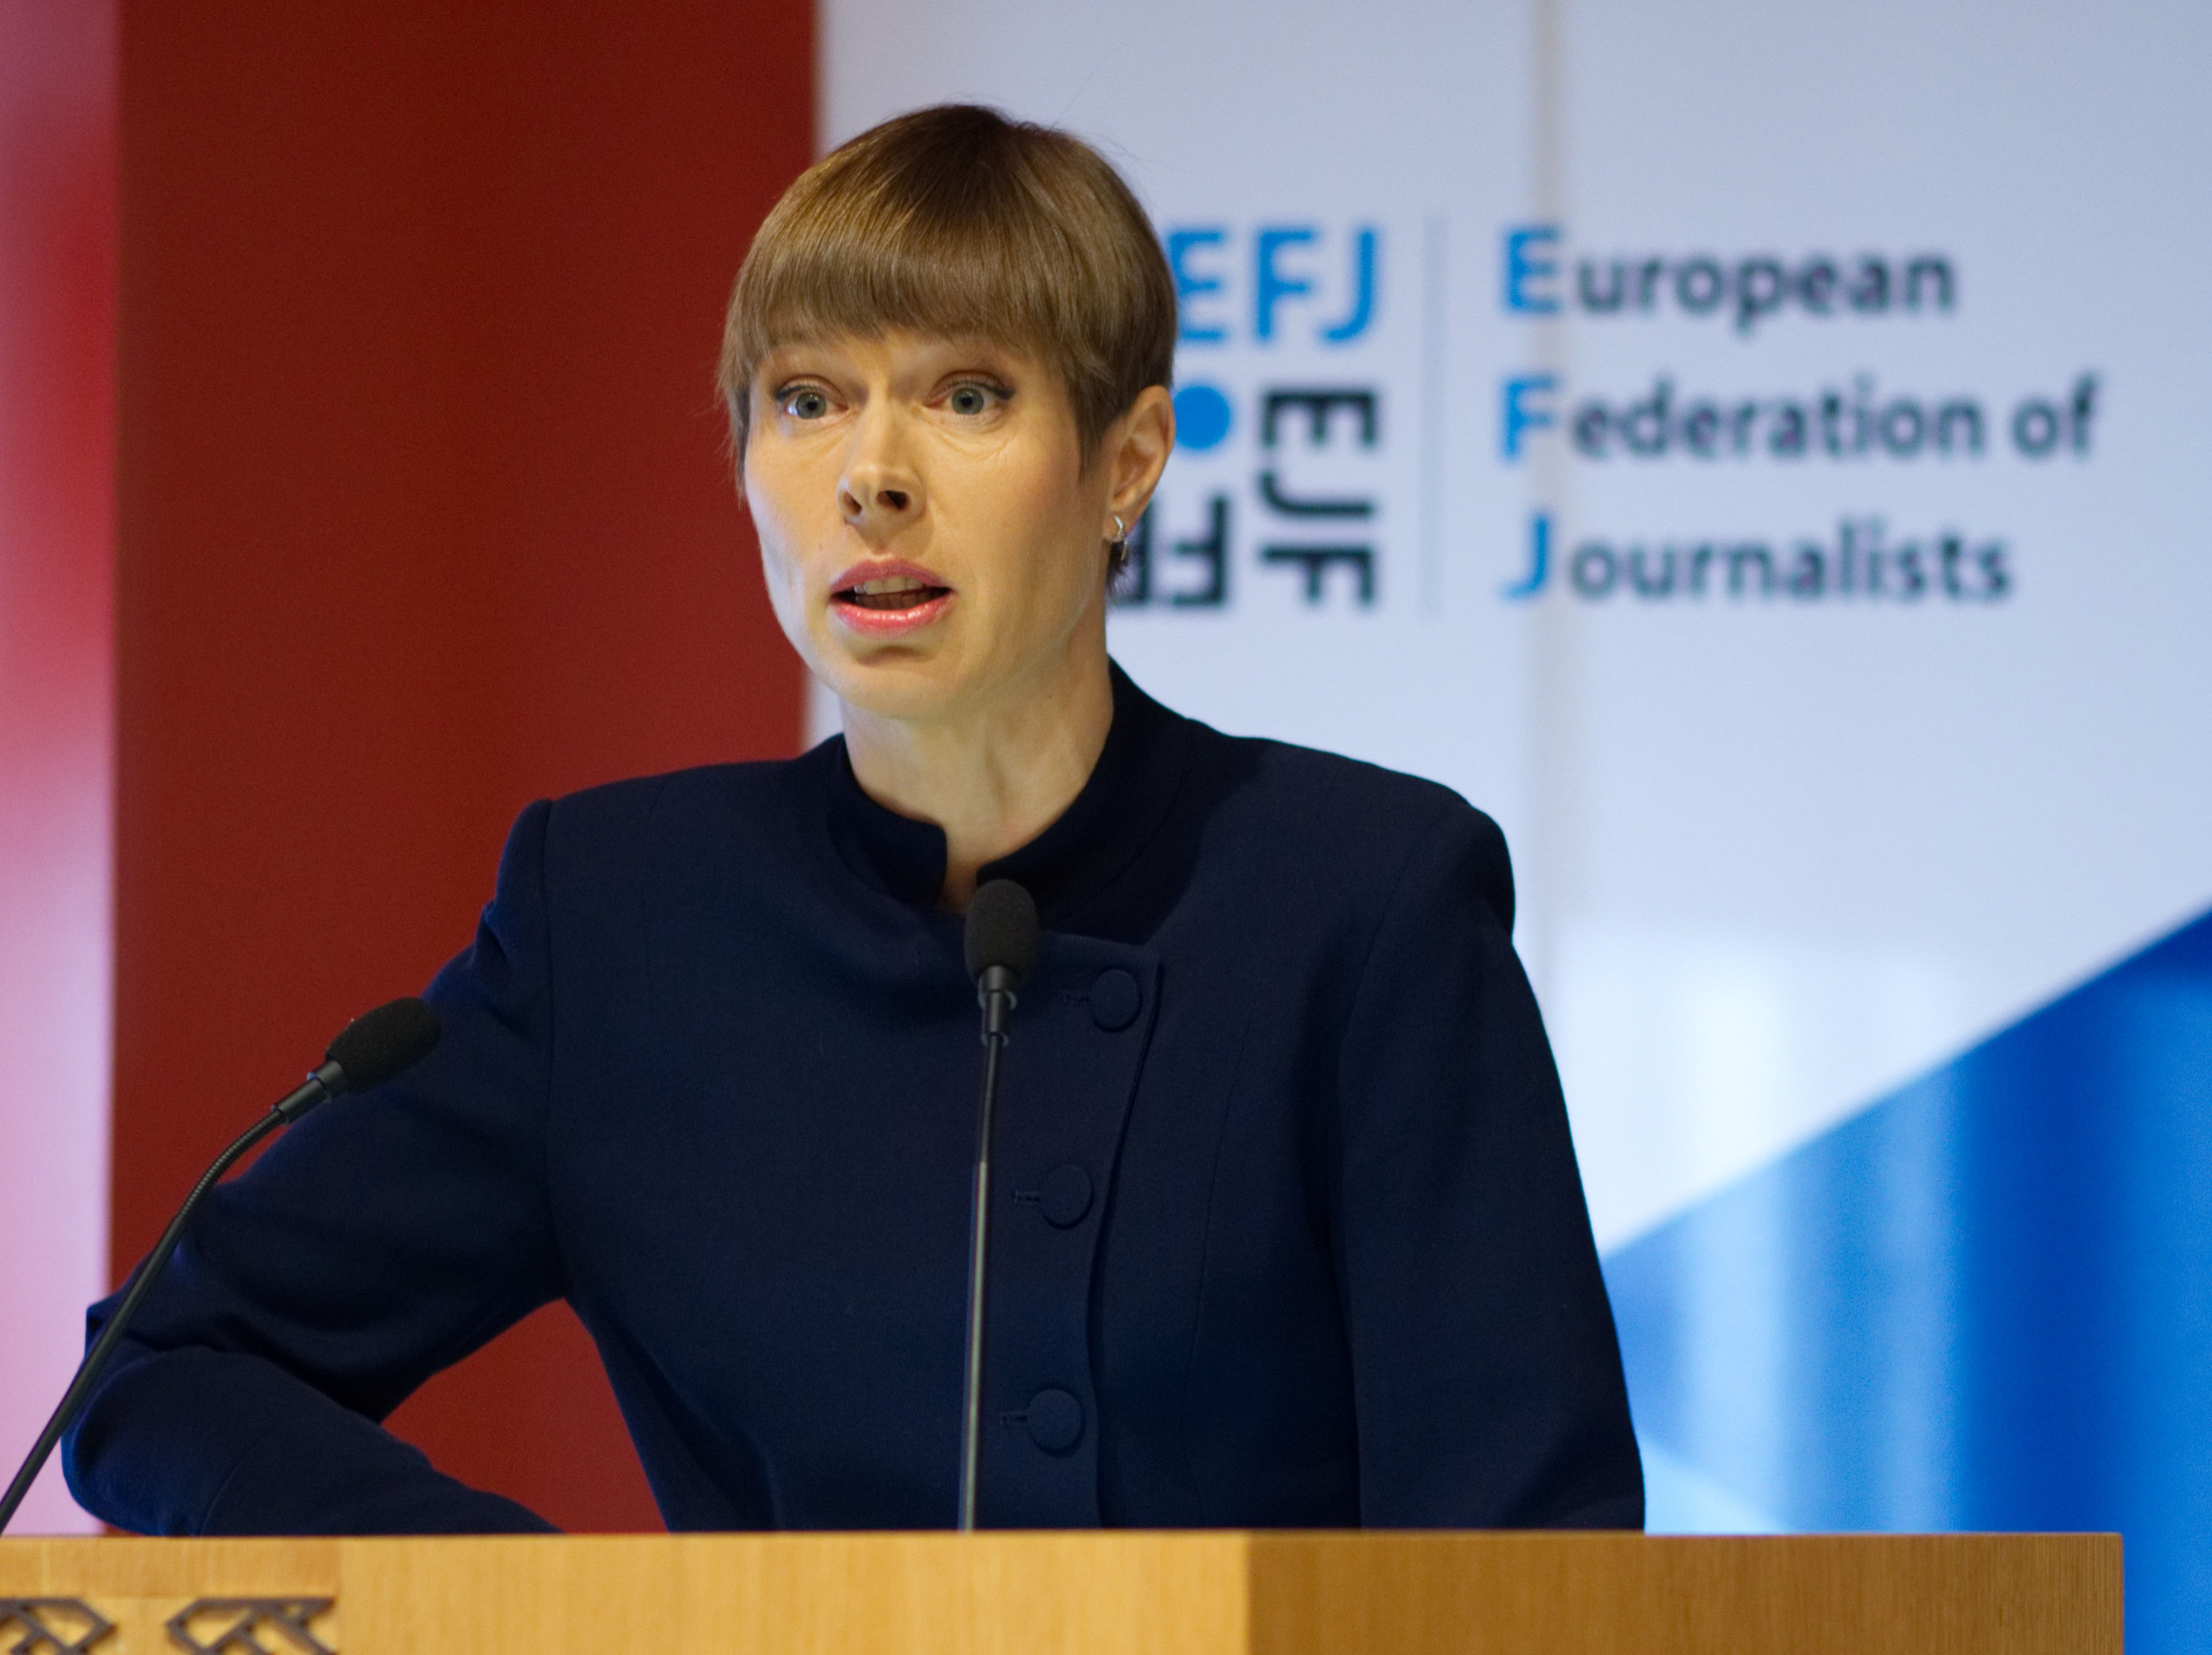 Baltic exchange: Europe’s journalists’ confer in Tallinn